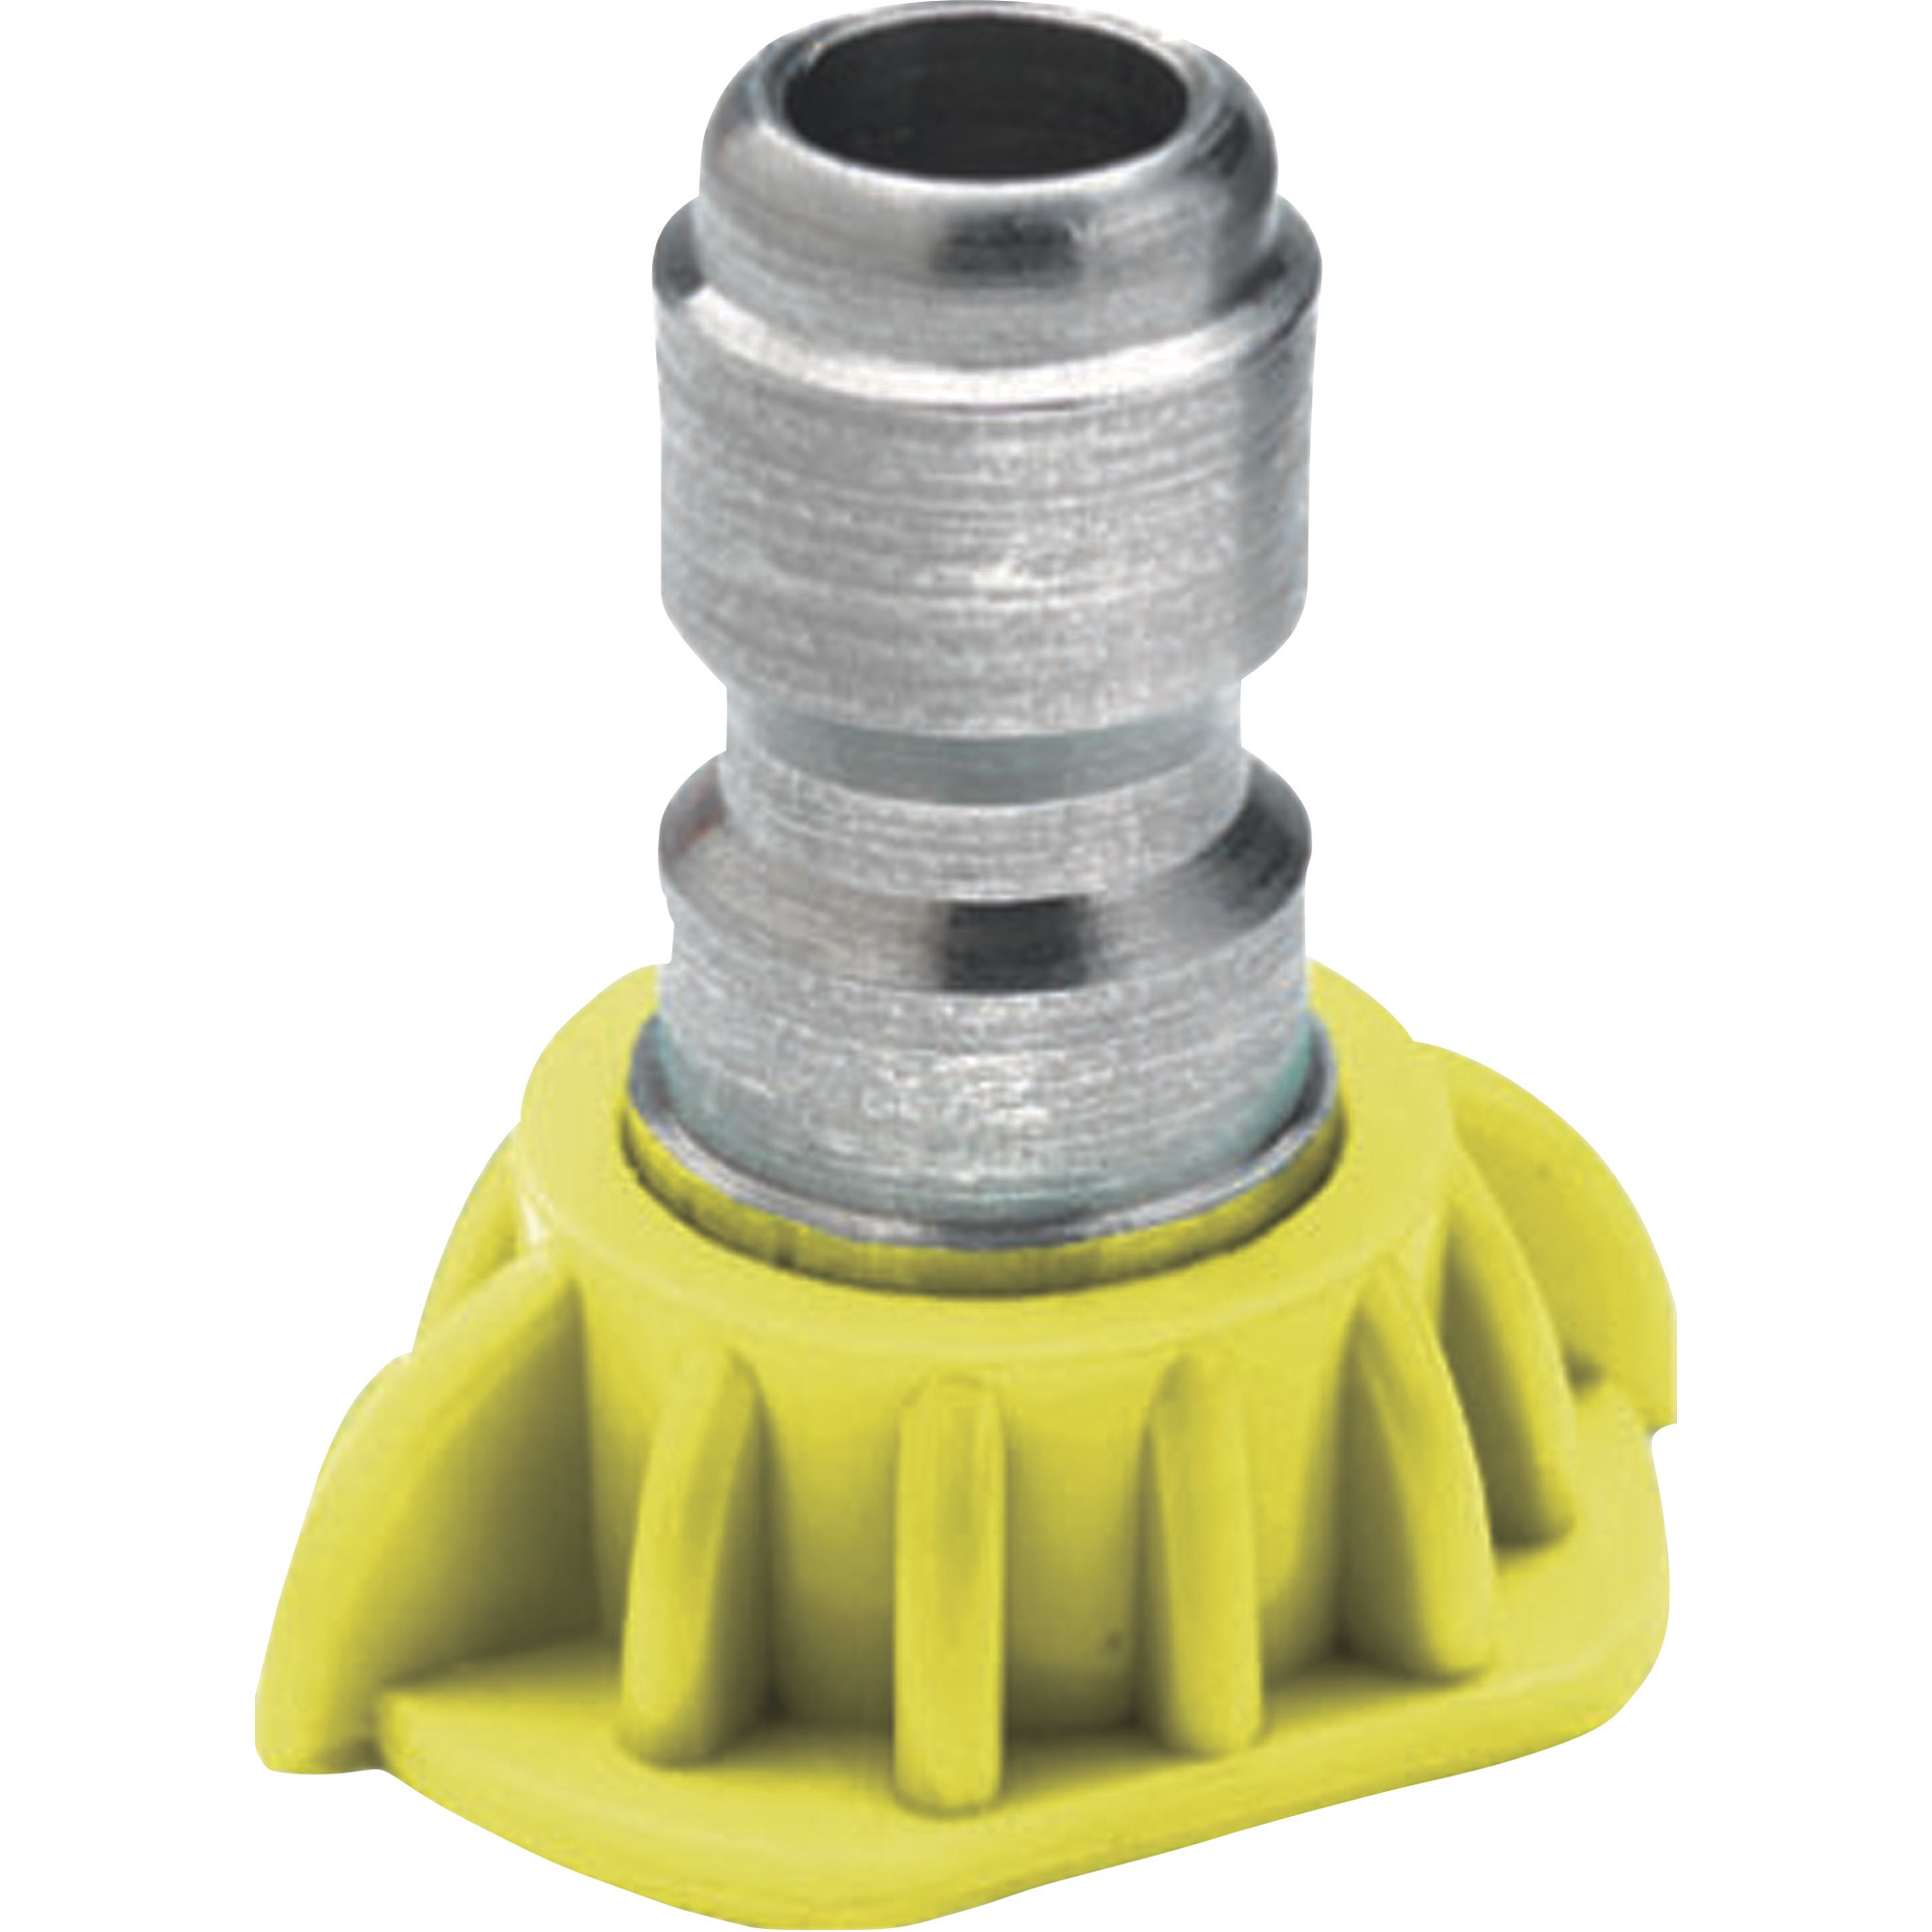 NorthStar Pressure Washer Quick Couple Spray Nozzle â 4.0 Size, 15 Degree Spray, Model N15040QP